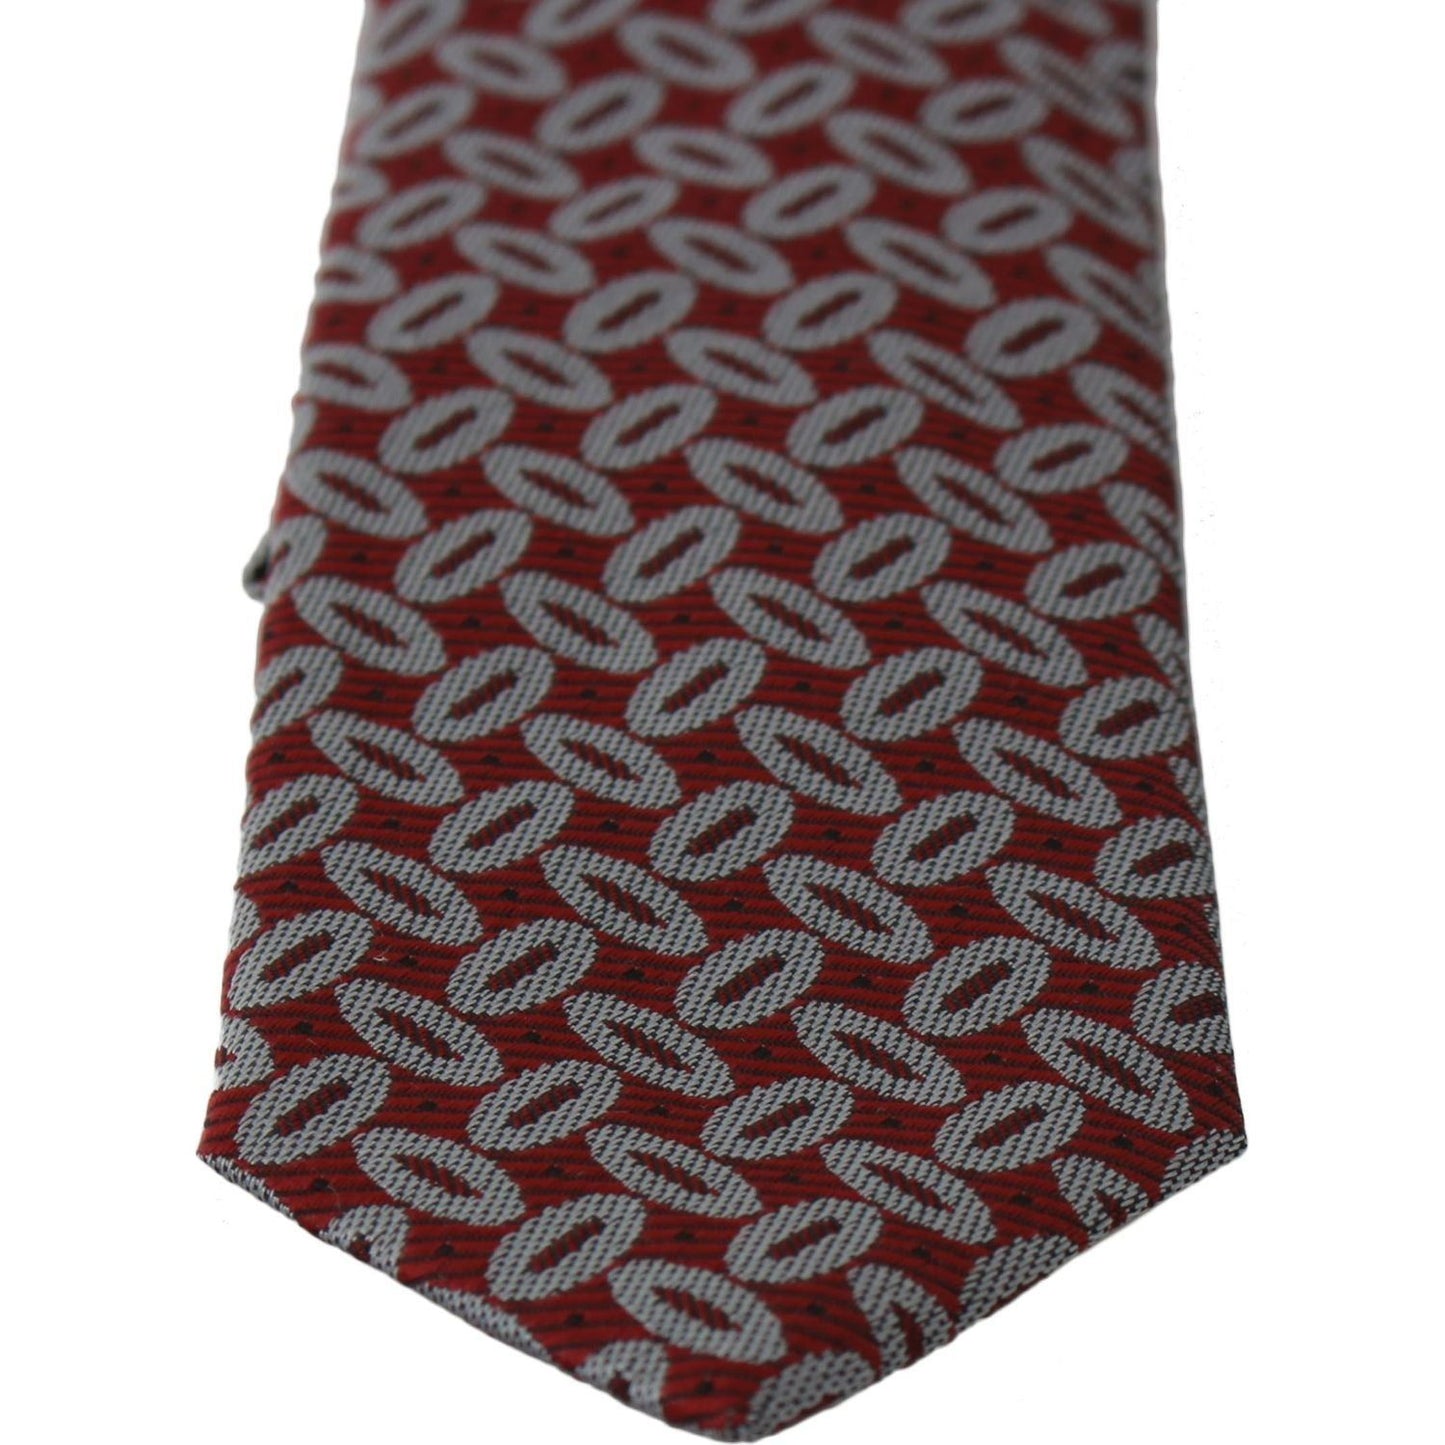 Dolce & Gabbana Elegant Red Printed Silk Neck Tie Necktie red-100-silk-printed-wide-necktie-men-tie IMG_1473-8f17cc65-5e3.jpg